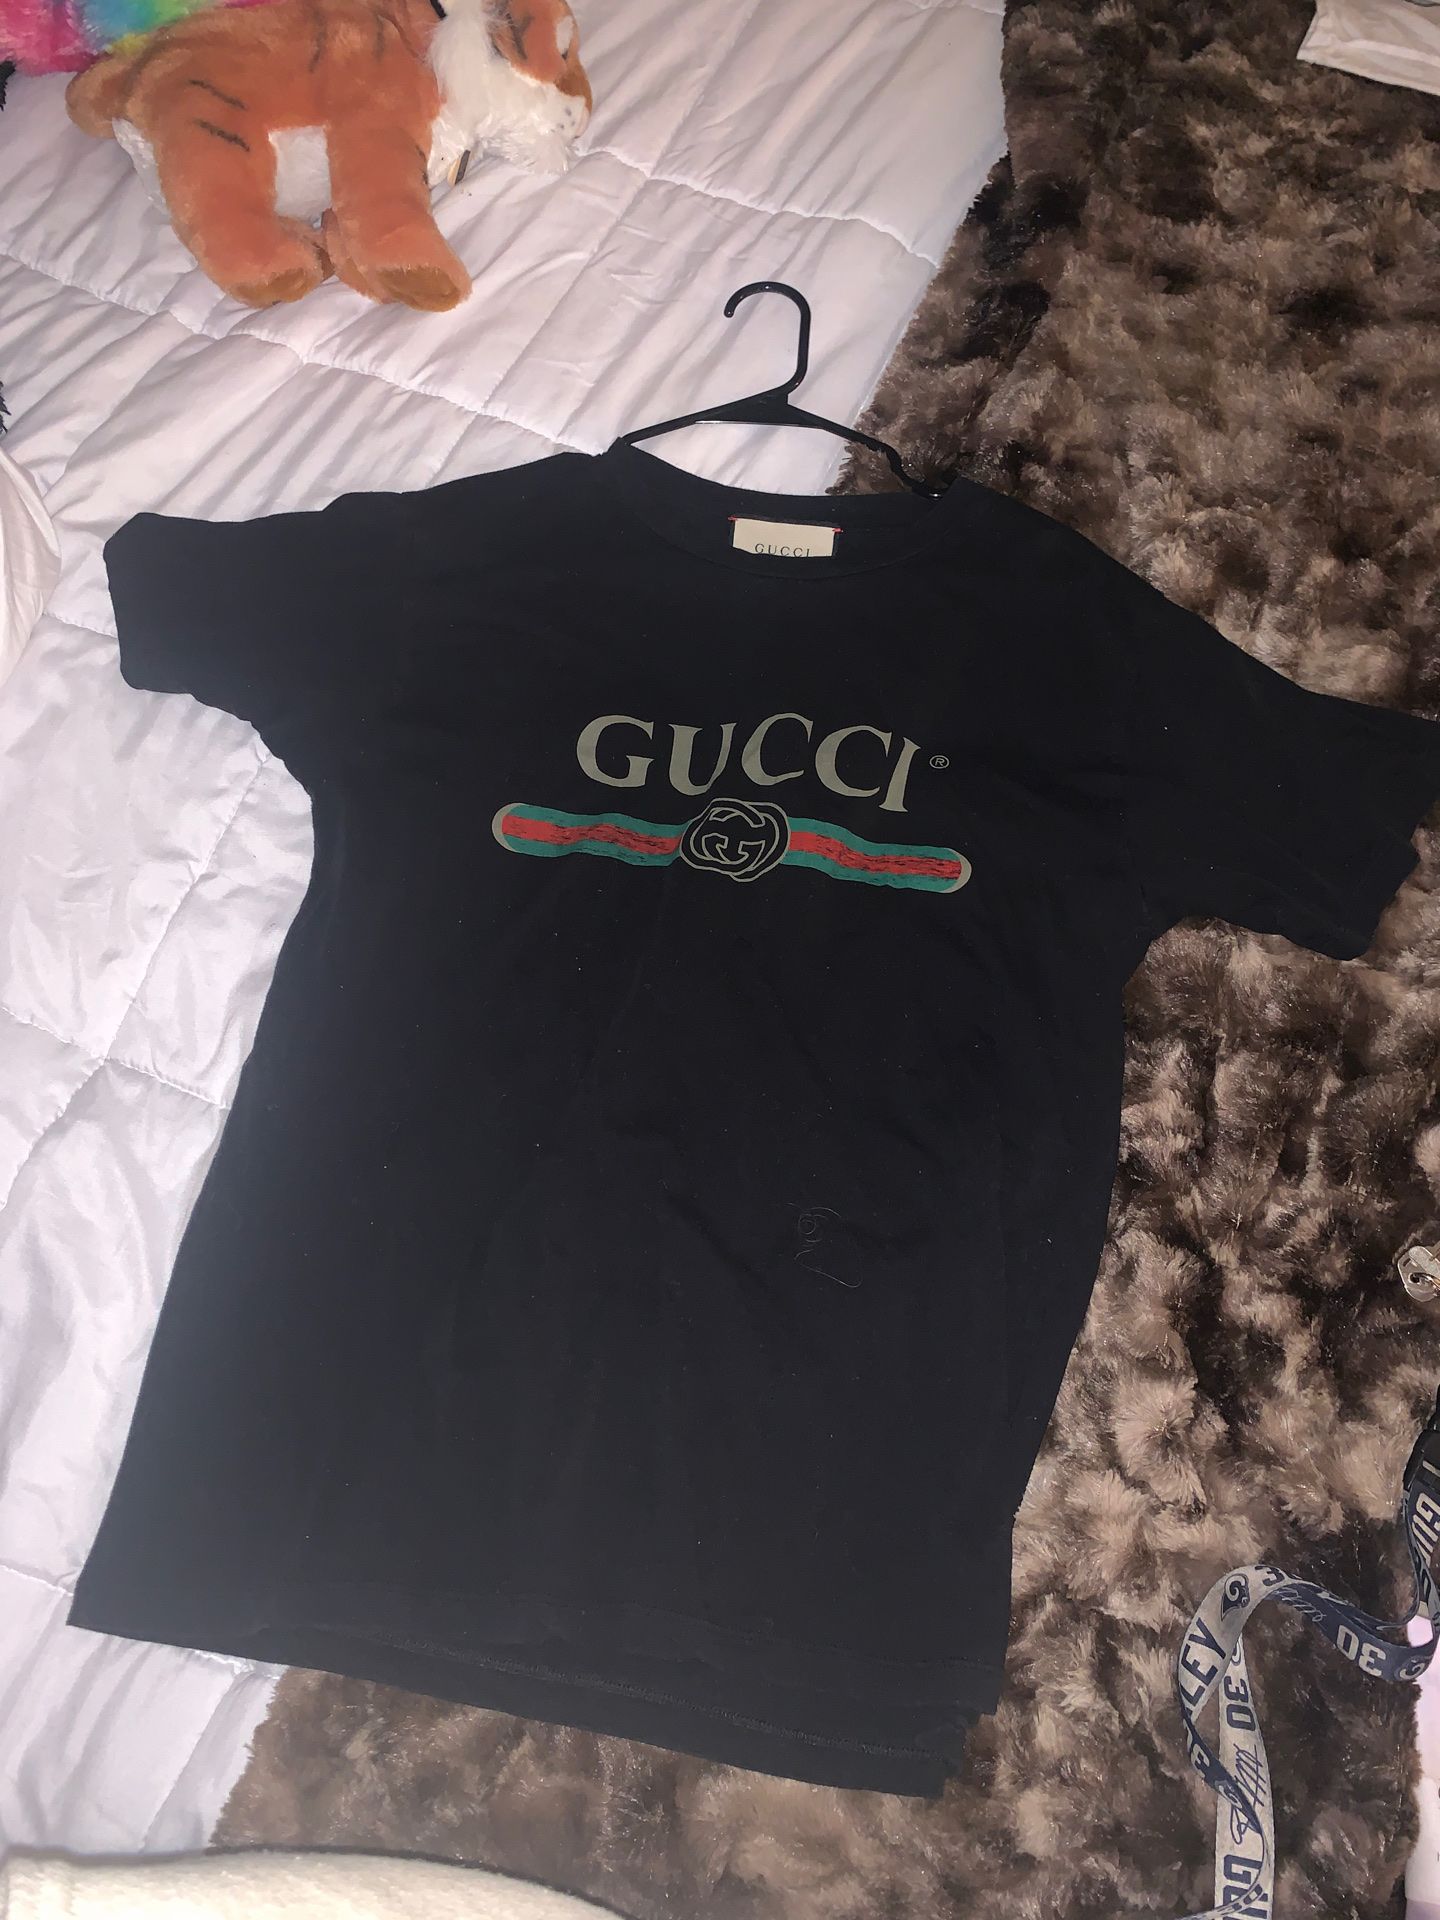 Authentic Gucci t shirt it’s men size small